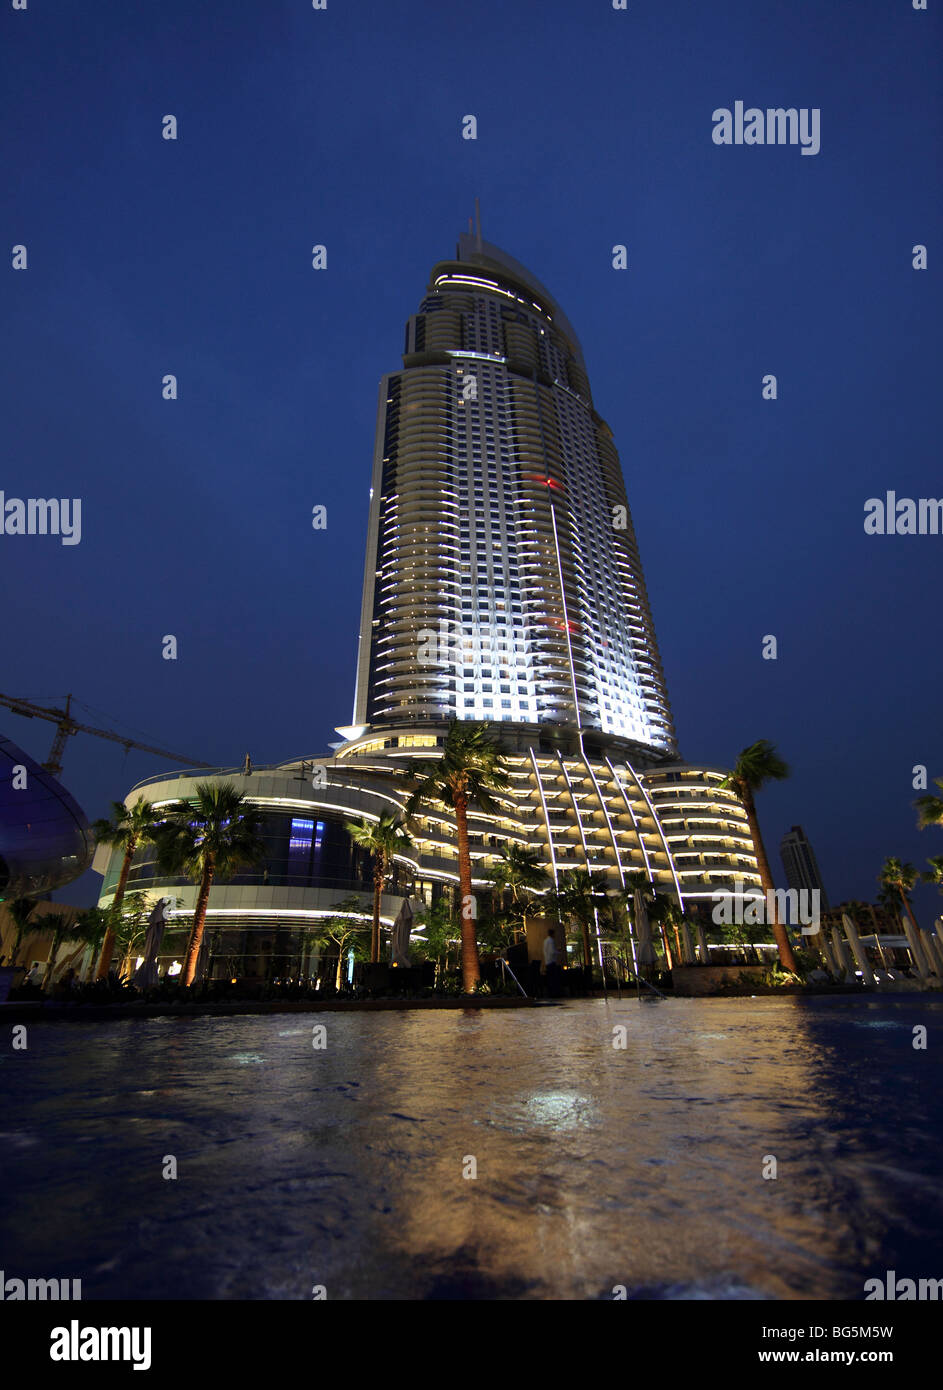 The Address Hotel in the evening, Dubai, United Arab Emirates Stock Photo